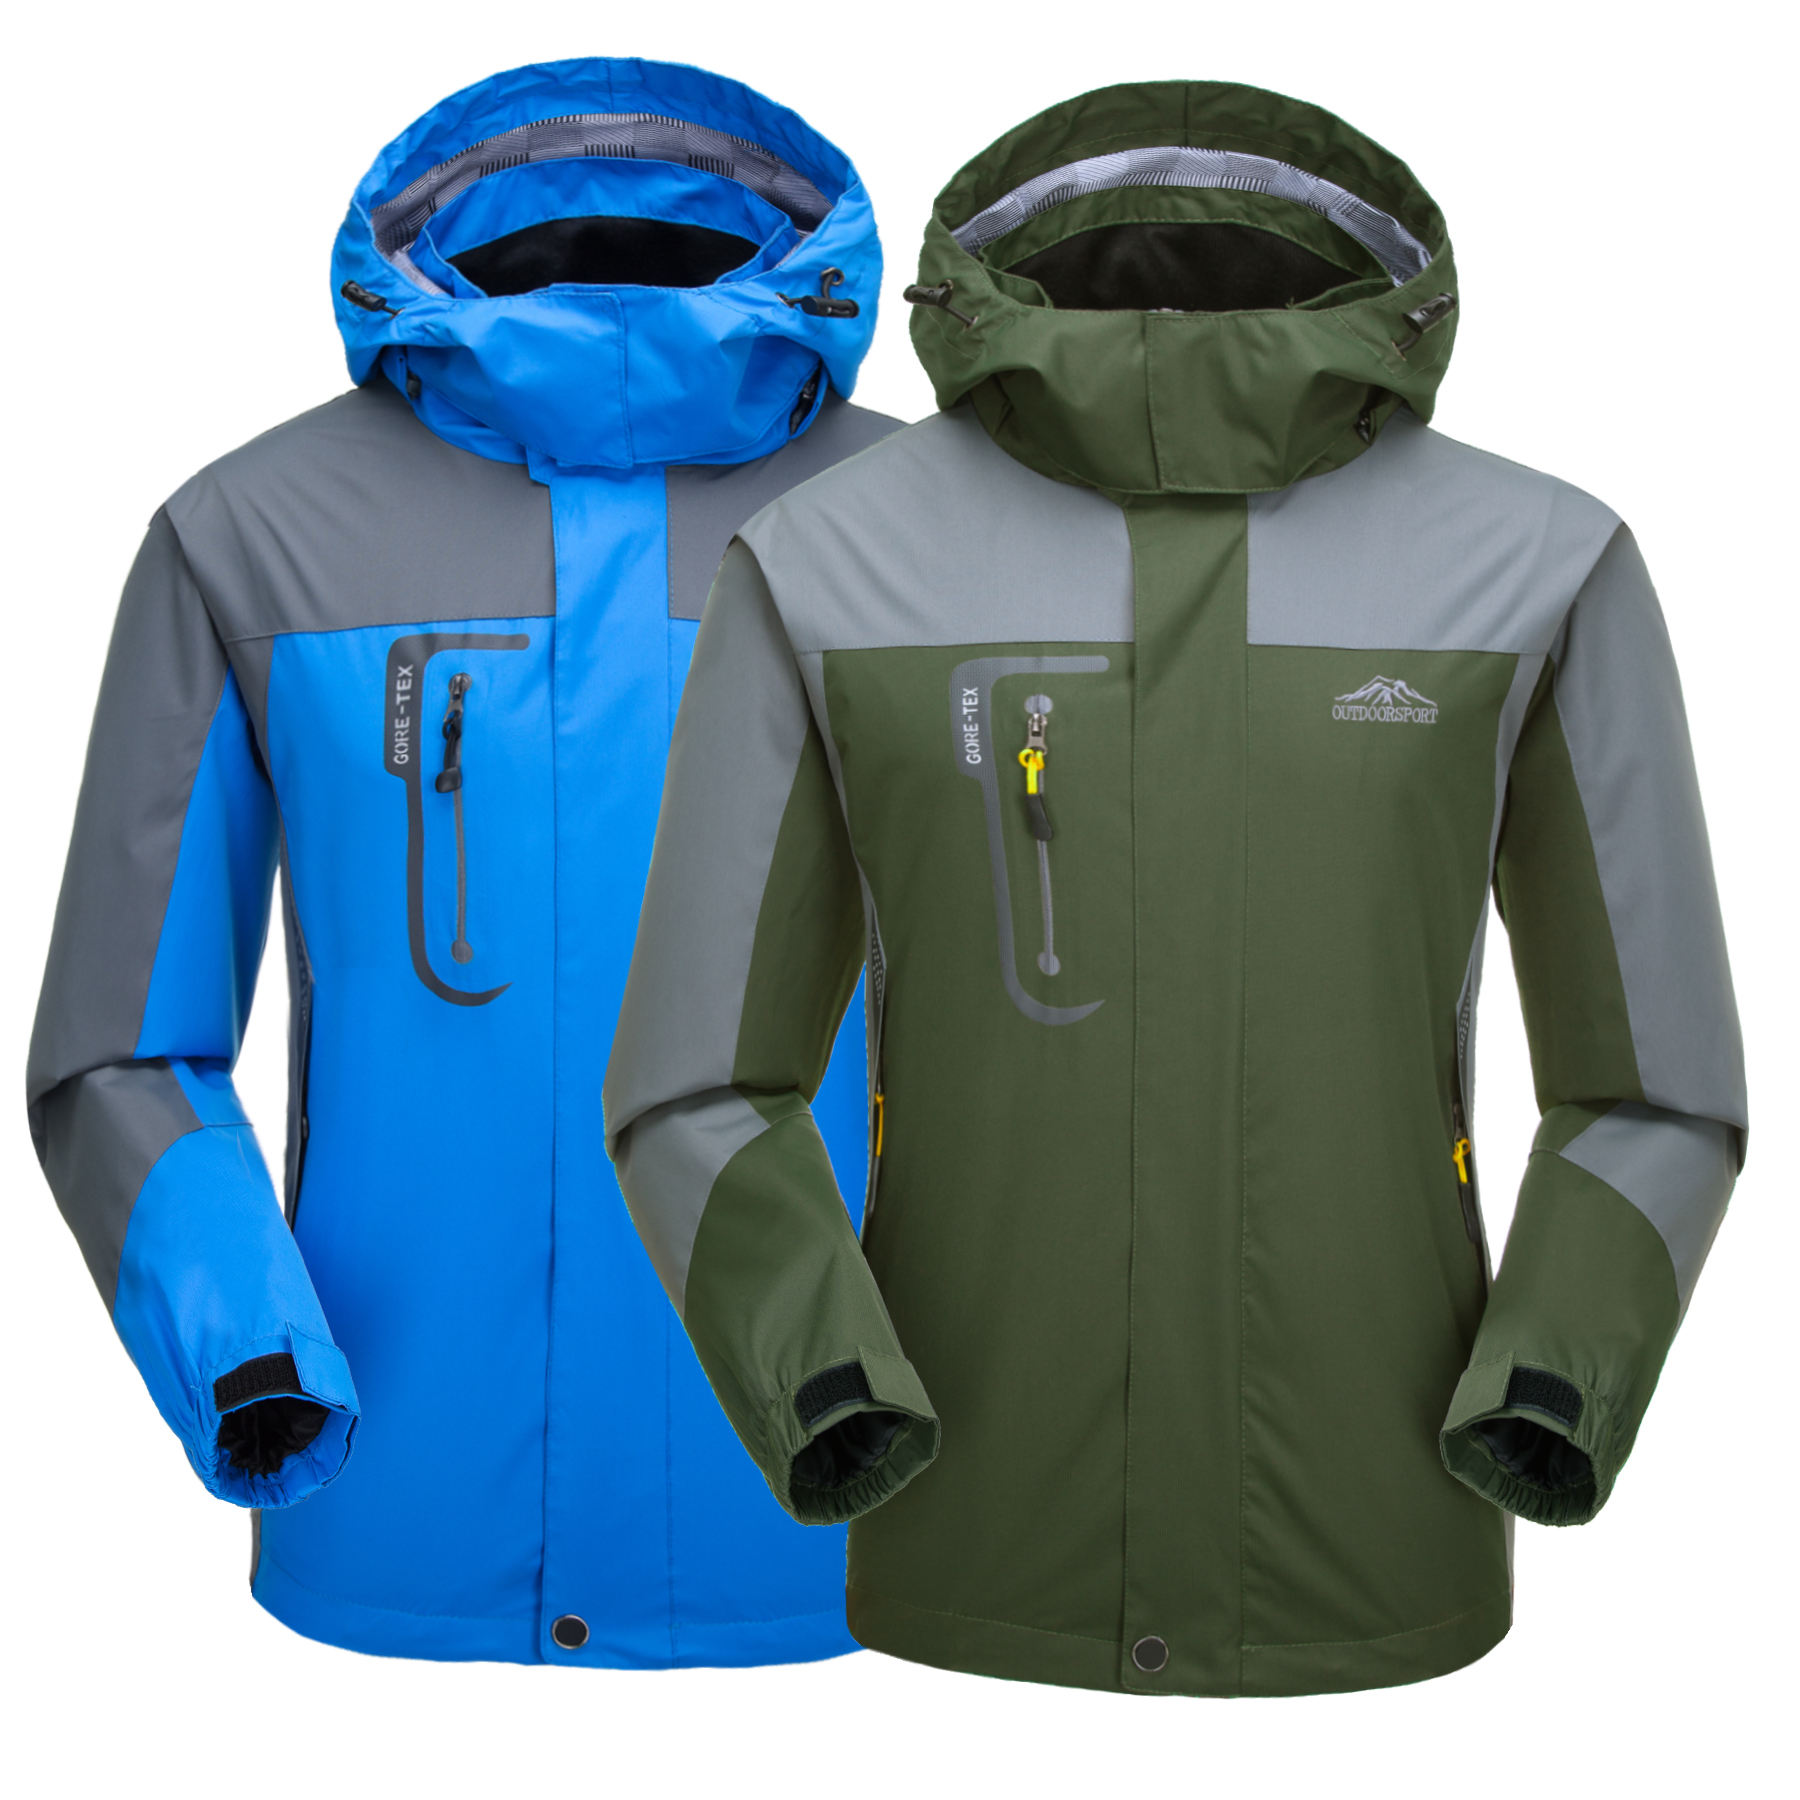 NEW Men Outdoor Camping Hiking Climbing Jacket Coat Top Outwear Windbreaker Sports Apparel Tracksuit Sweater Athletic Blazers